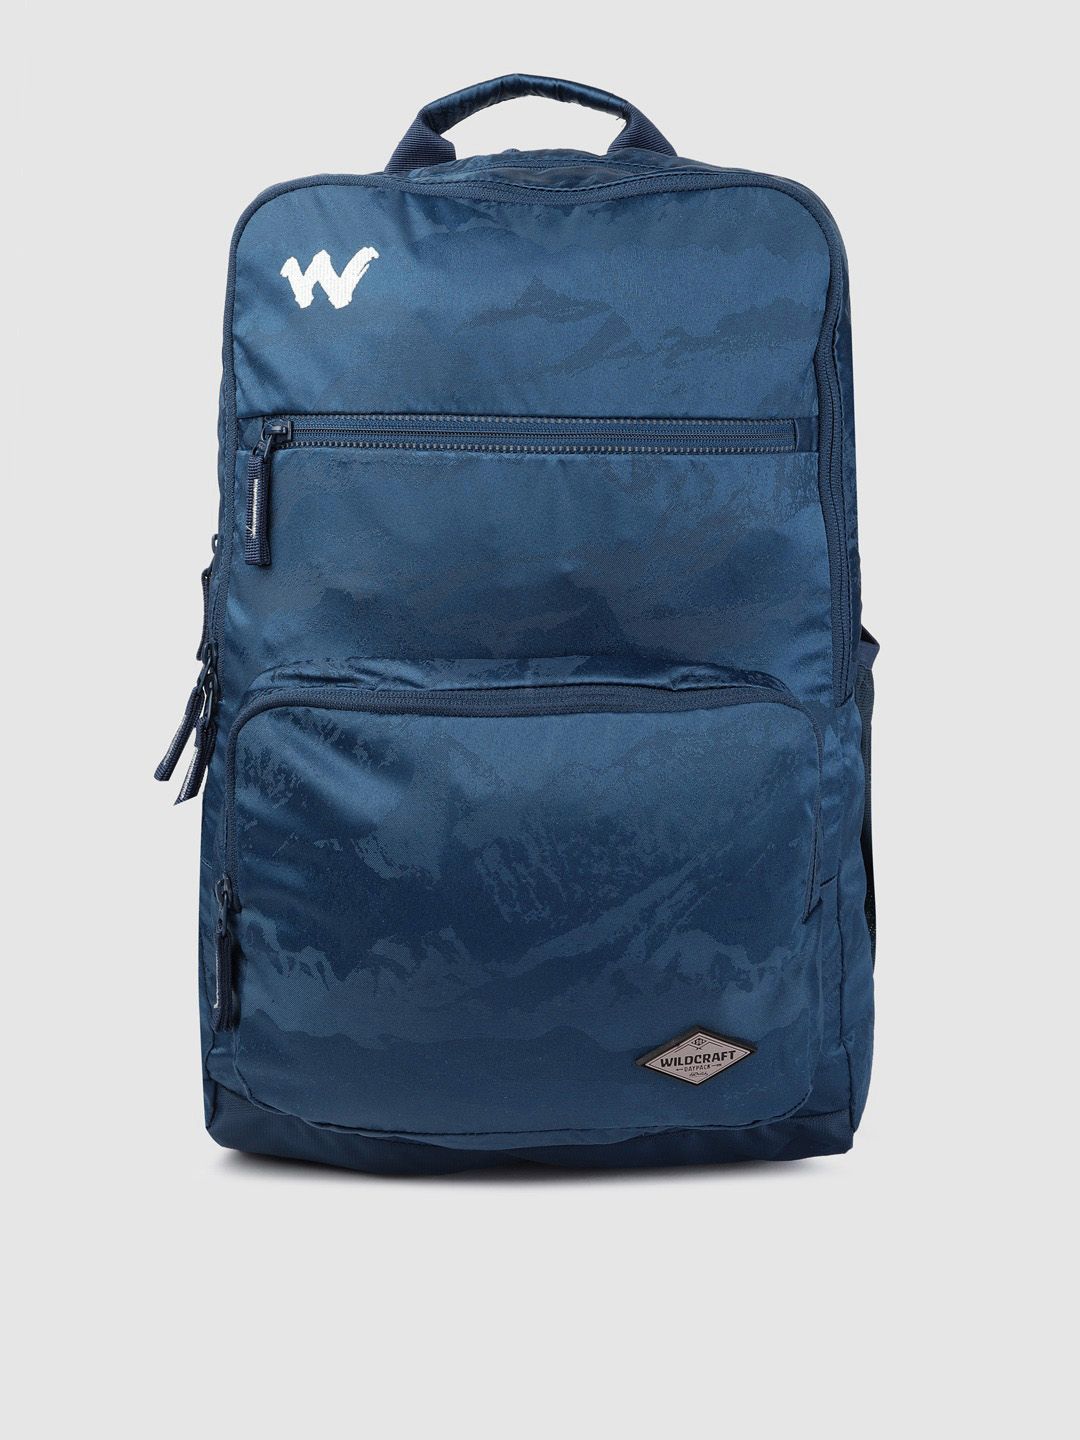 Wildcraft Unisex Blue Evo2 Jacq Backpack Price in India